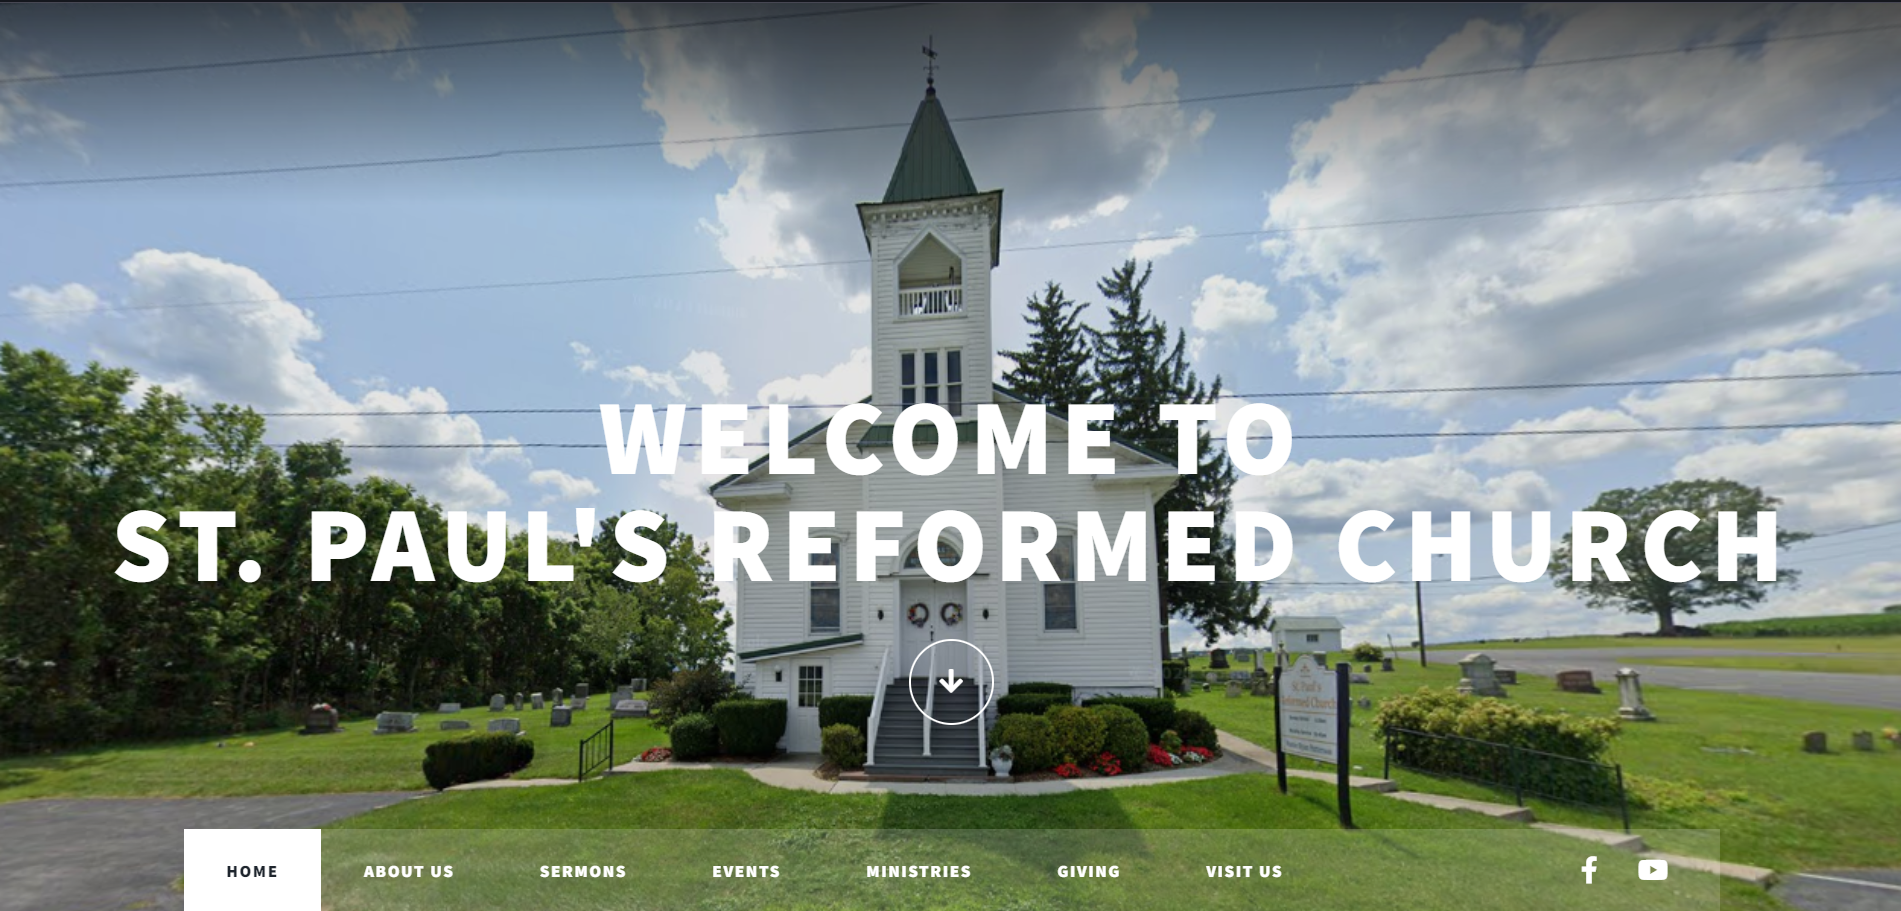 St. Paul's Reformed Church Website Image